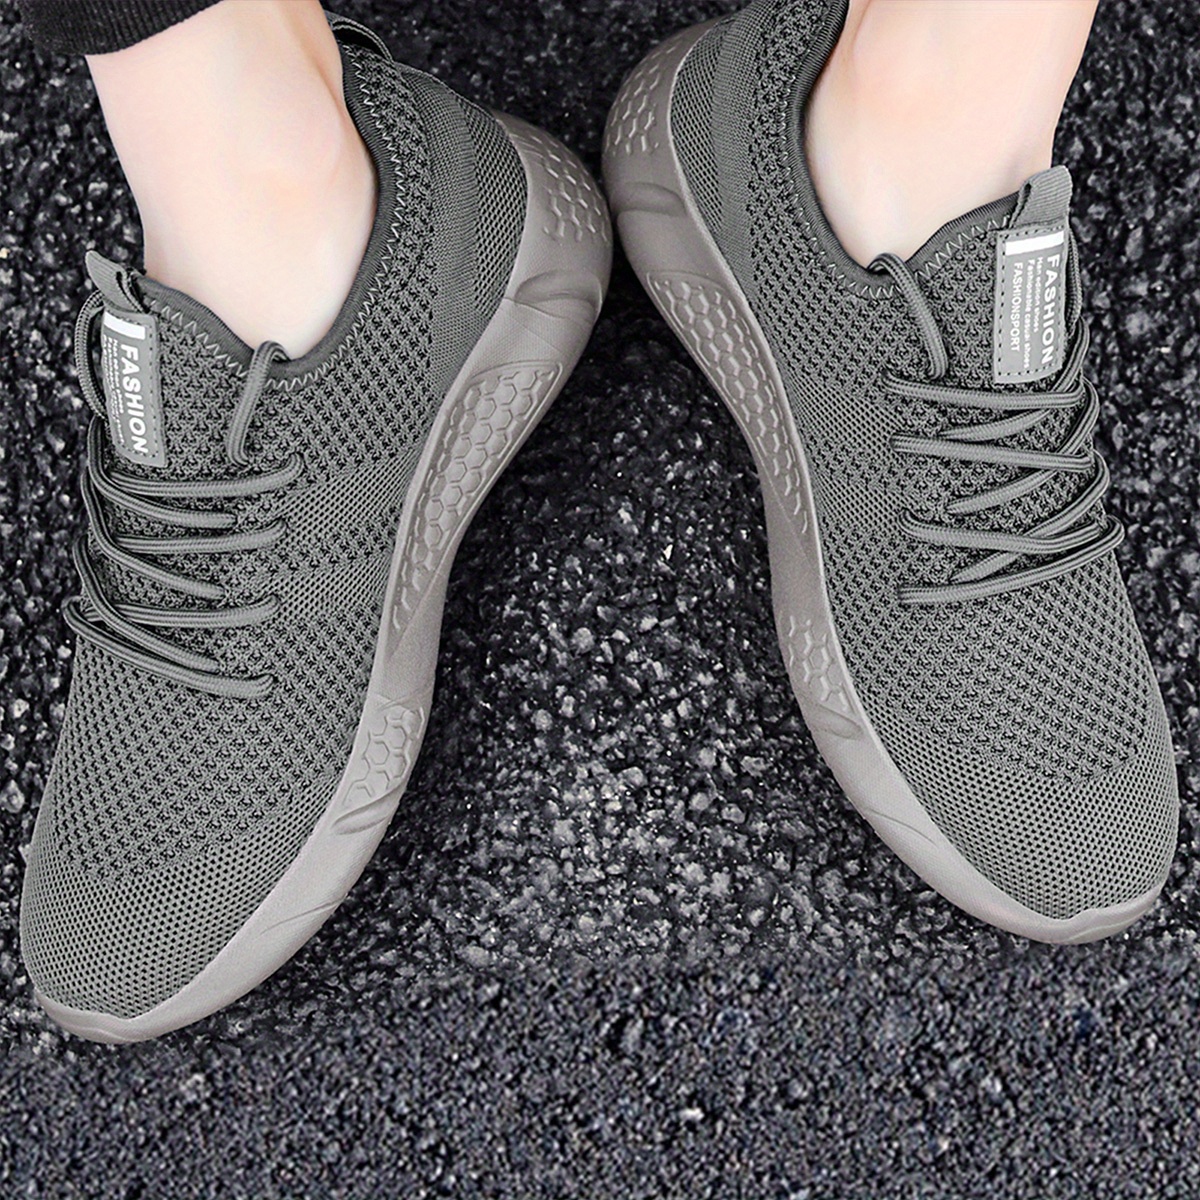 mens lightweight breathable shoes for jogging running walking details 14